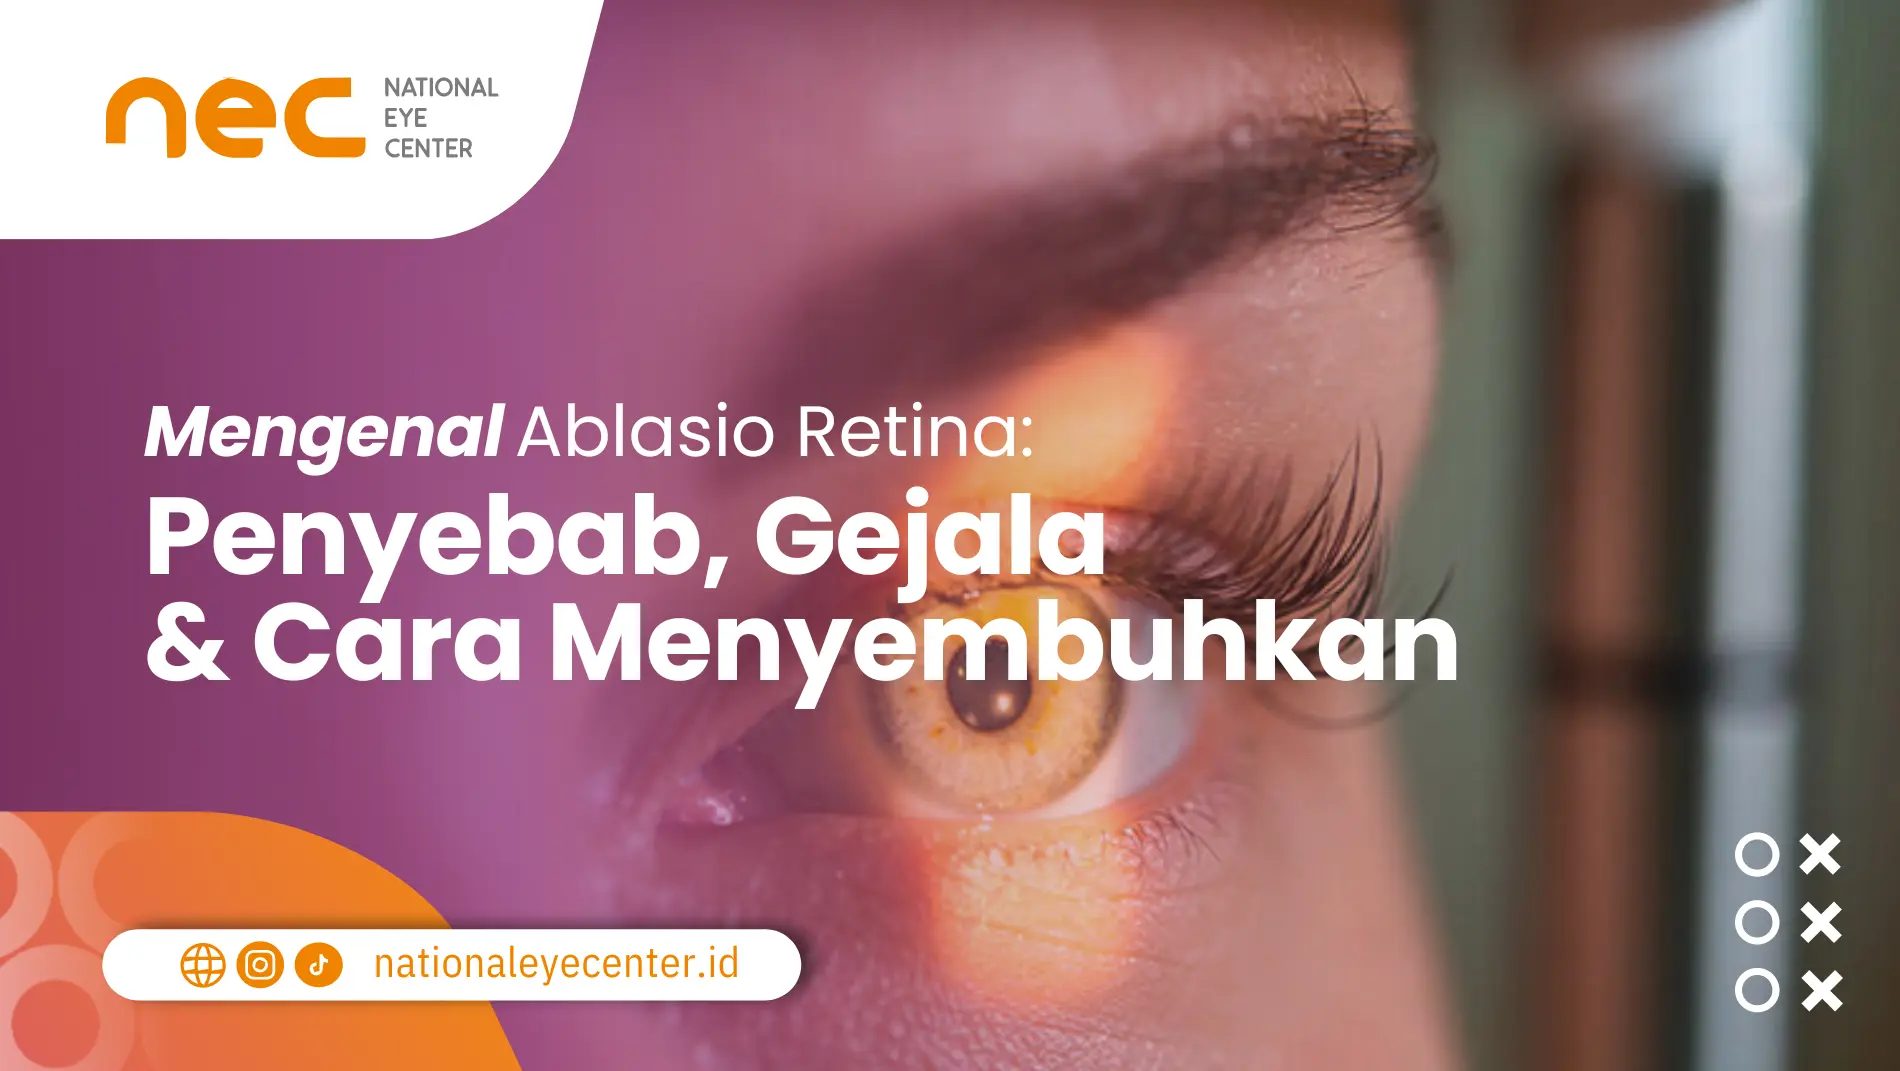 Mengenal Ablasio Retina Penyebab, Gejala, dan Cara Menyembuhkan